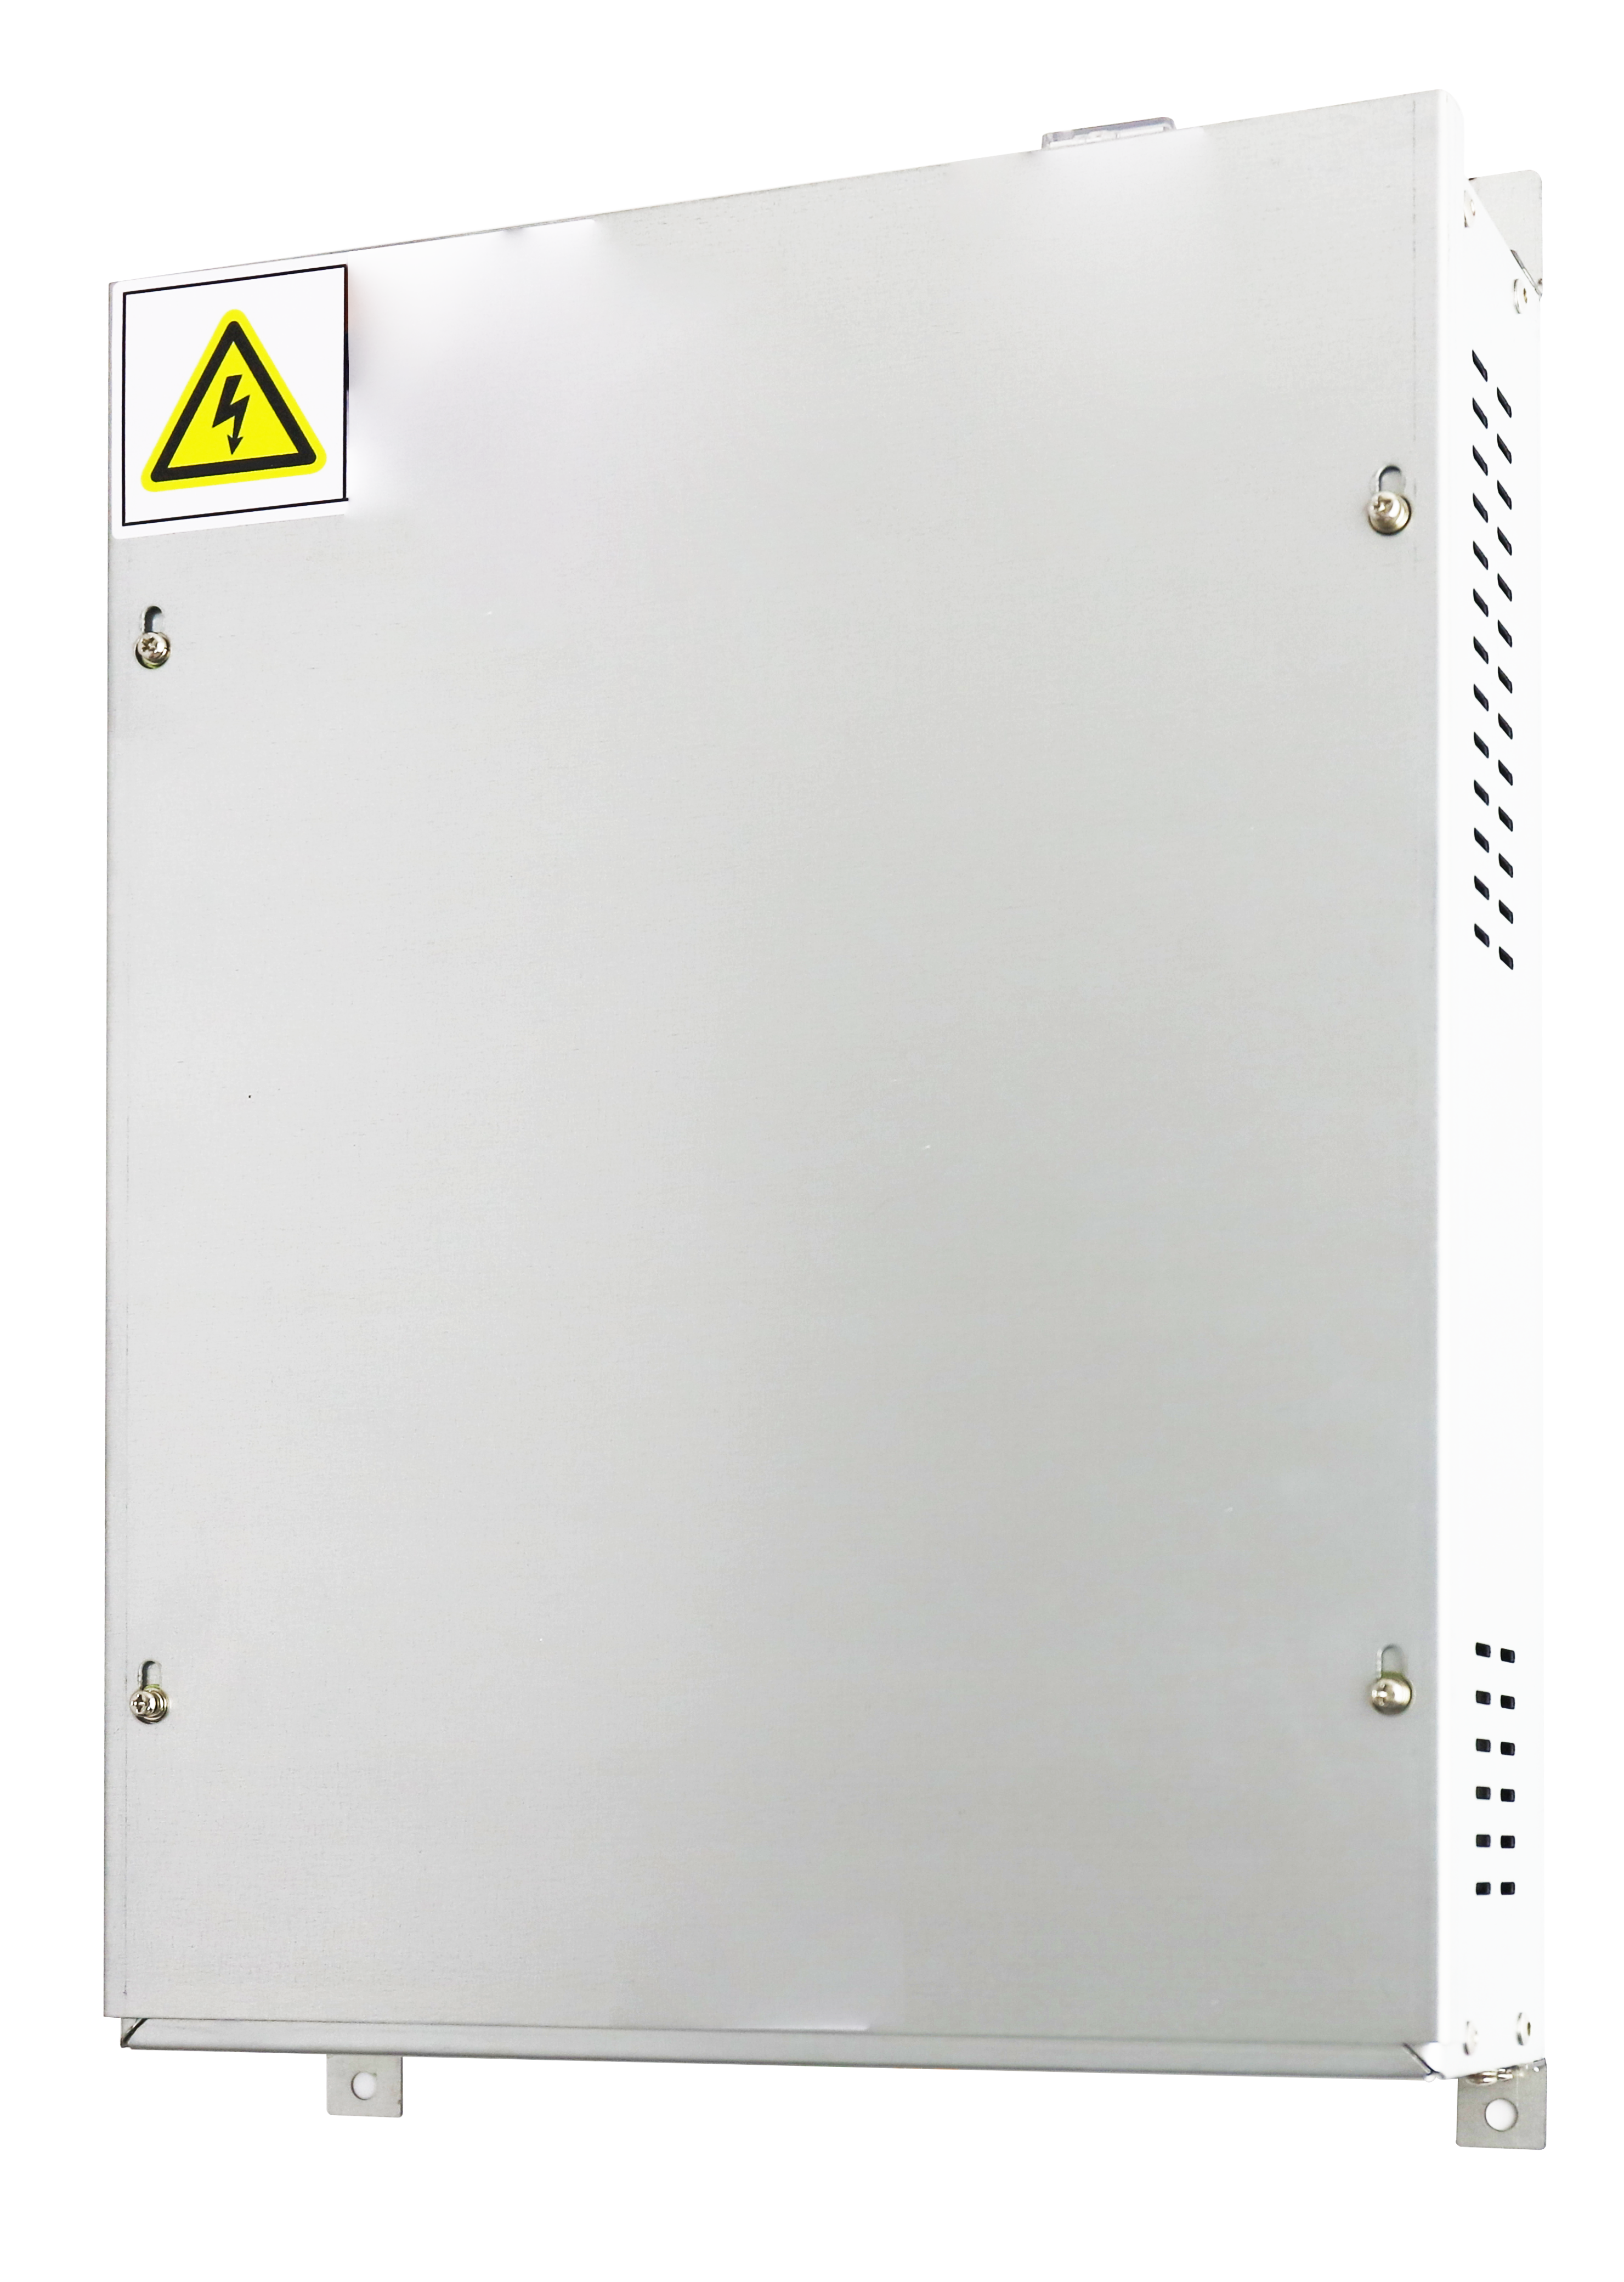 ARD-JS Elevator ARD device